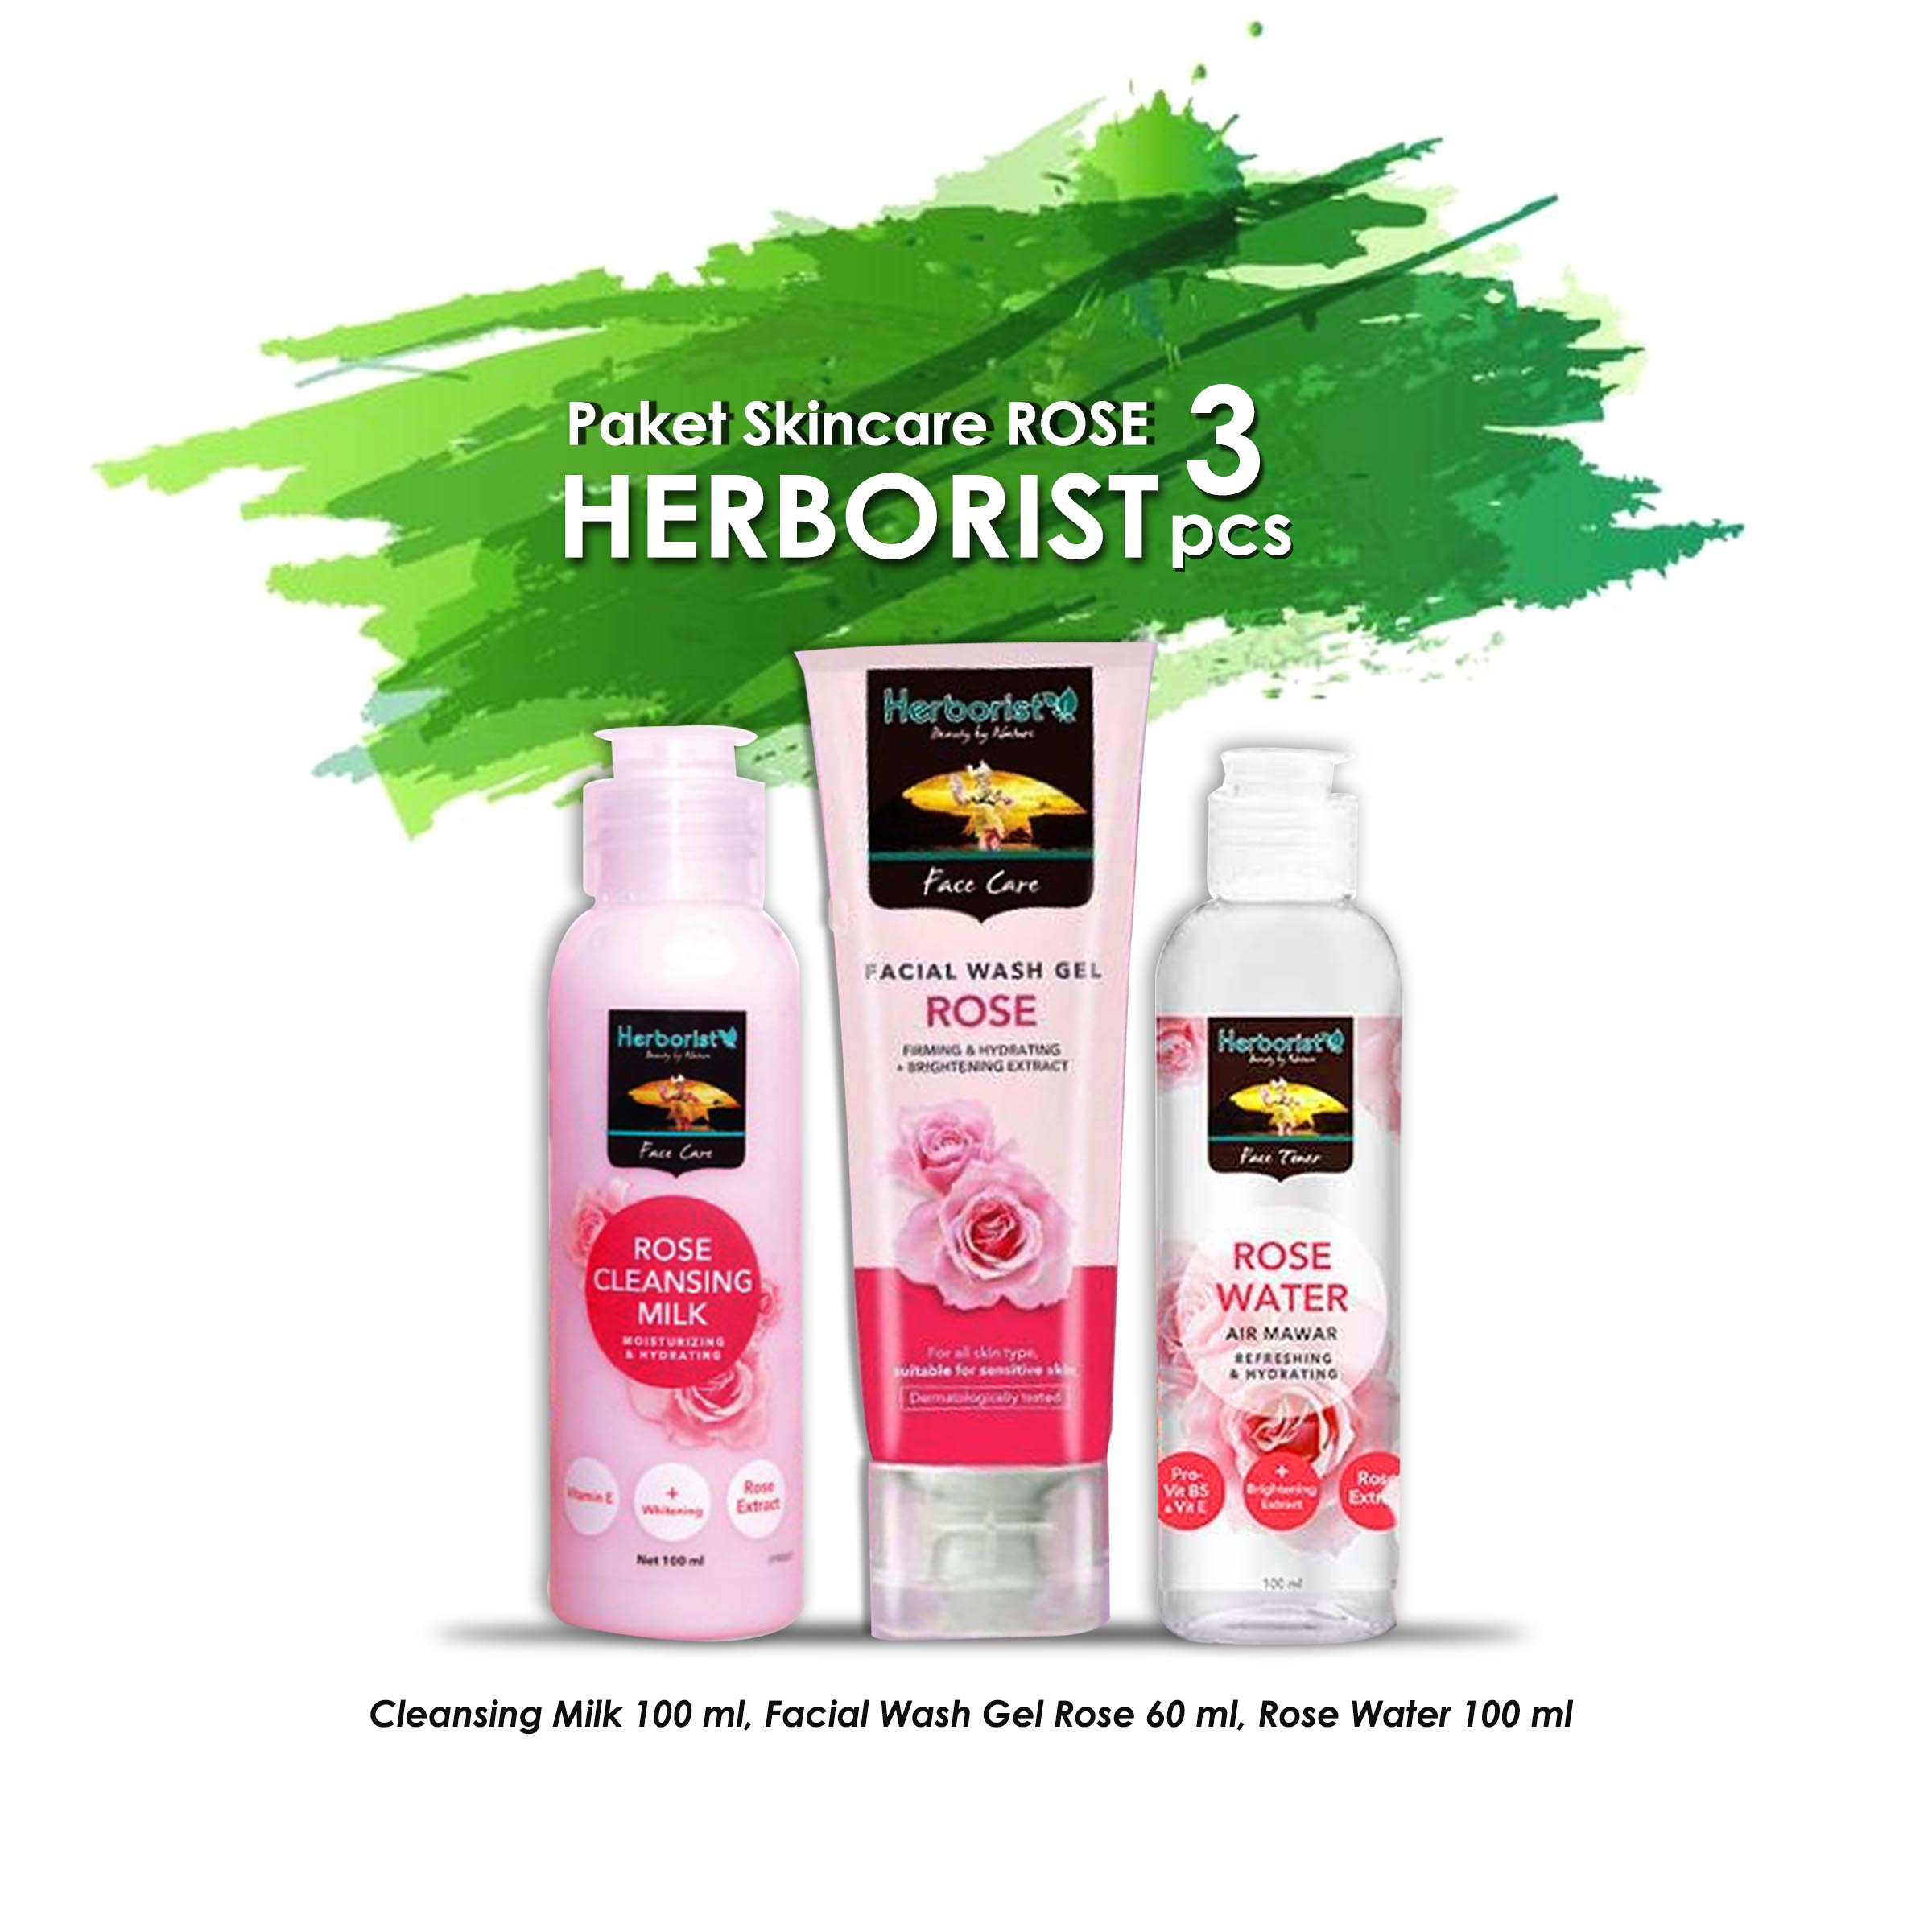 Paket Skincare Herborist Mawar 3 pcs (Facial Wash 60 ml, Cleansing Milk 100 ml, Rose Water 100 ml)